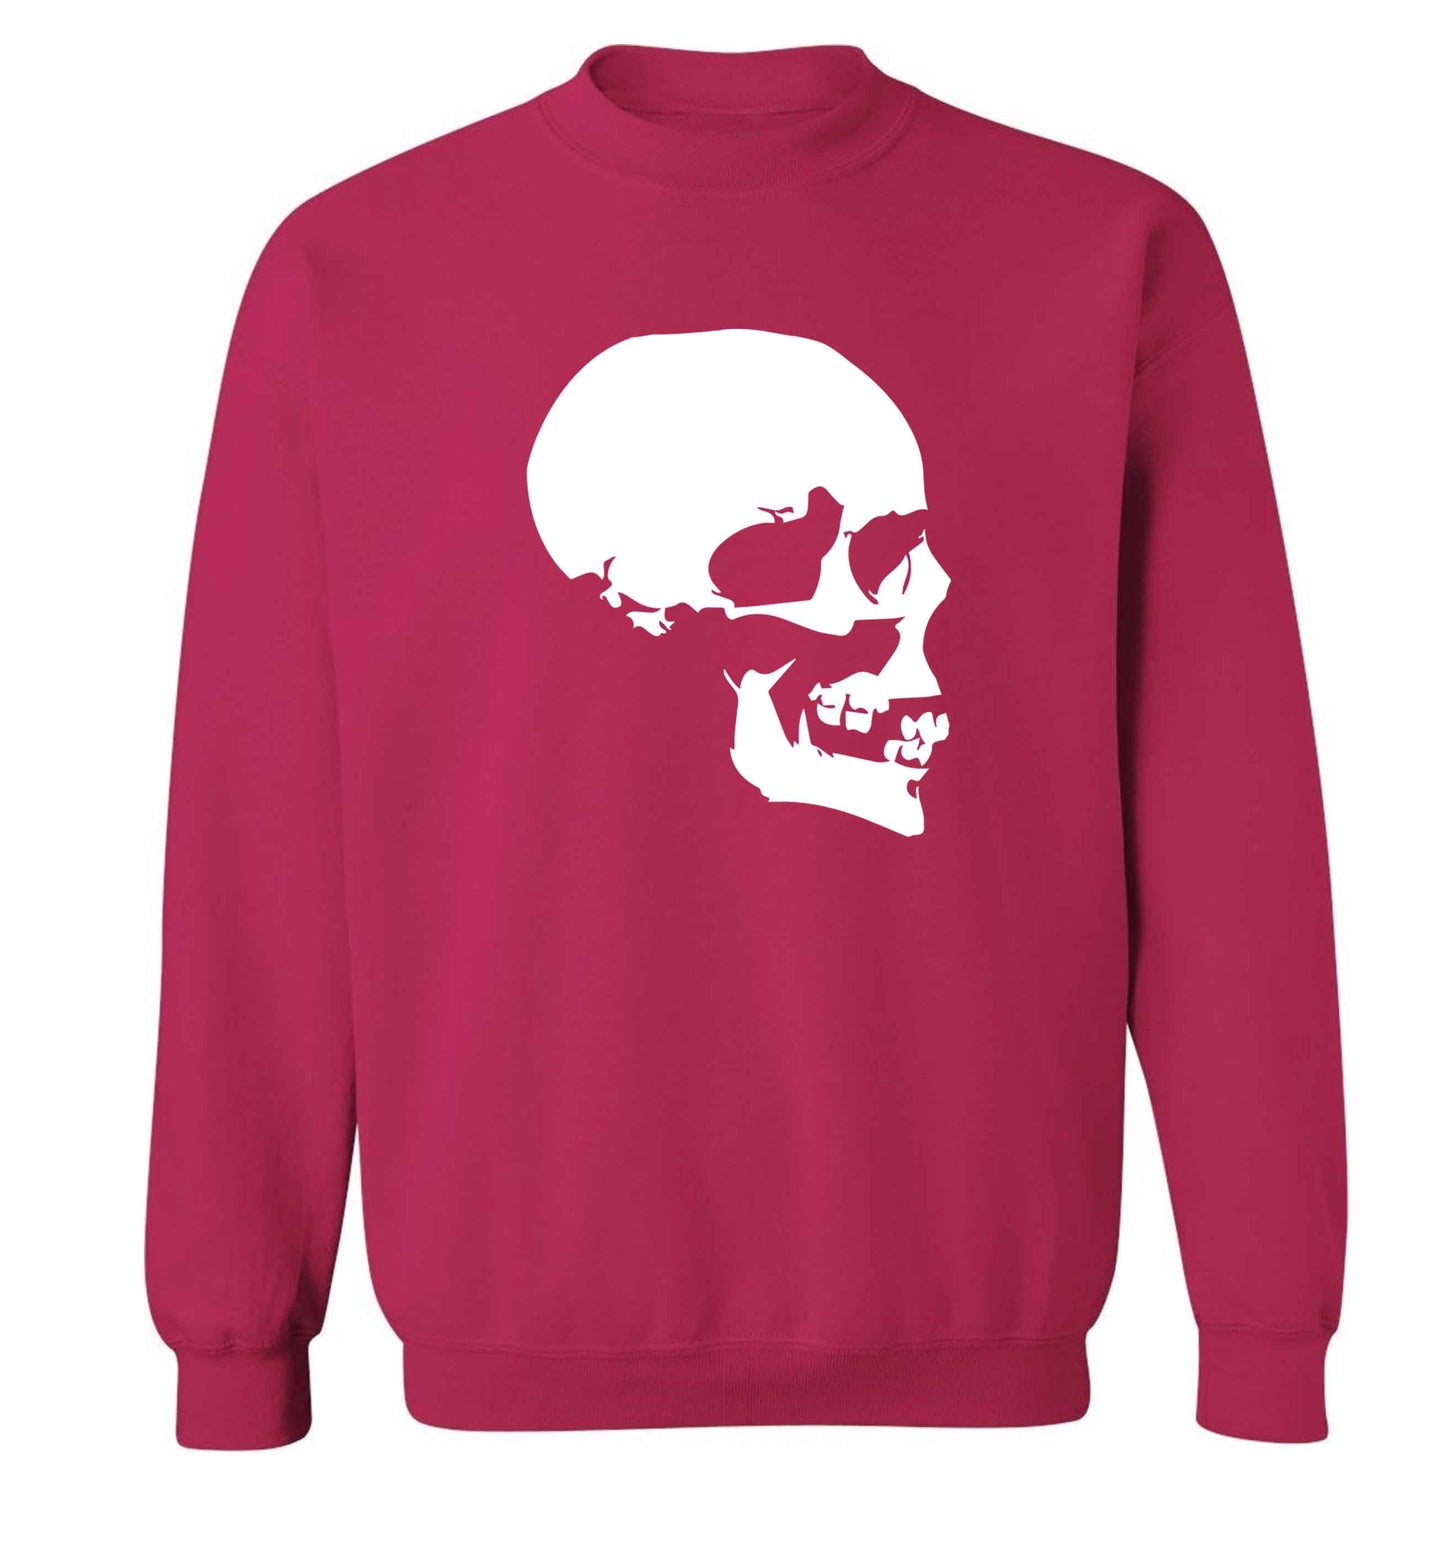 Personalised Skull Halloween adult's unisex pink sweater 2XL